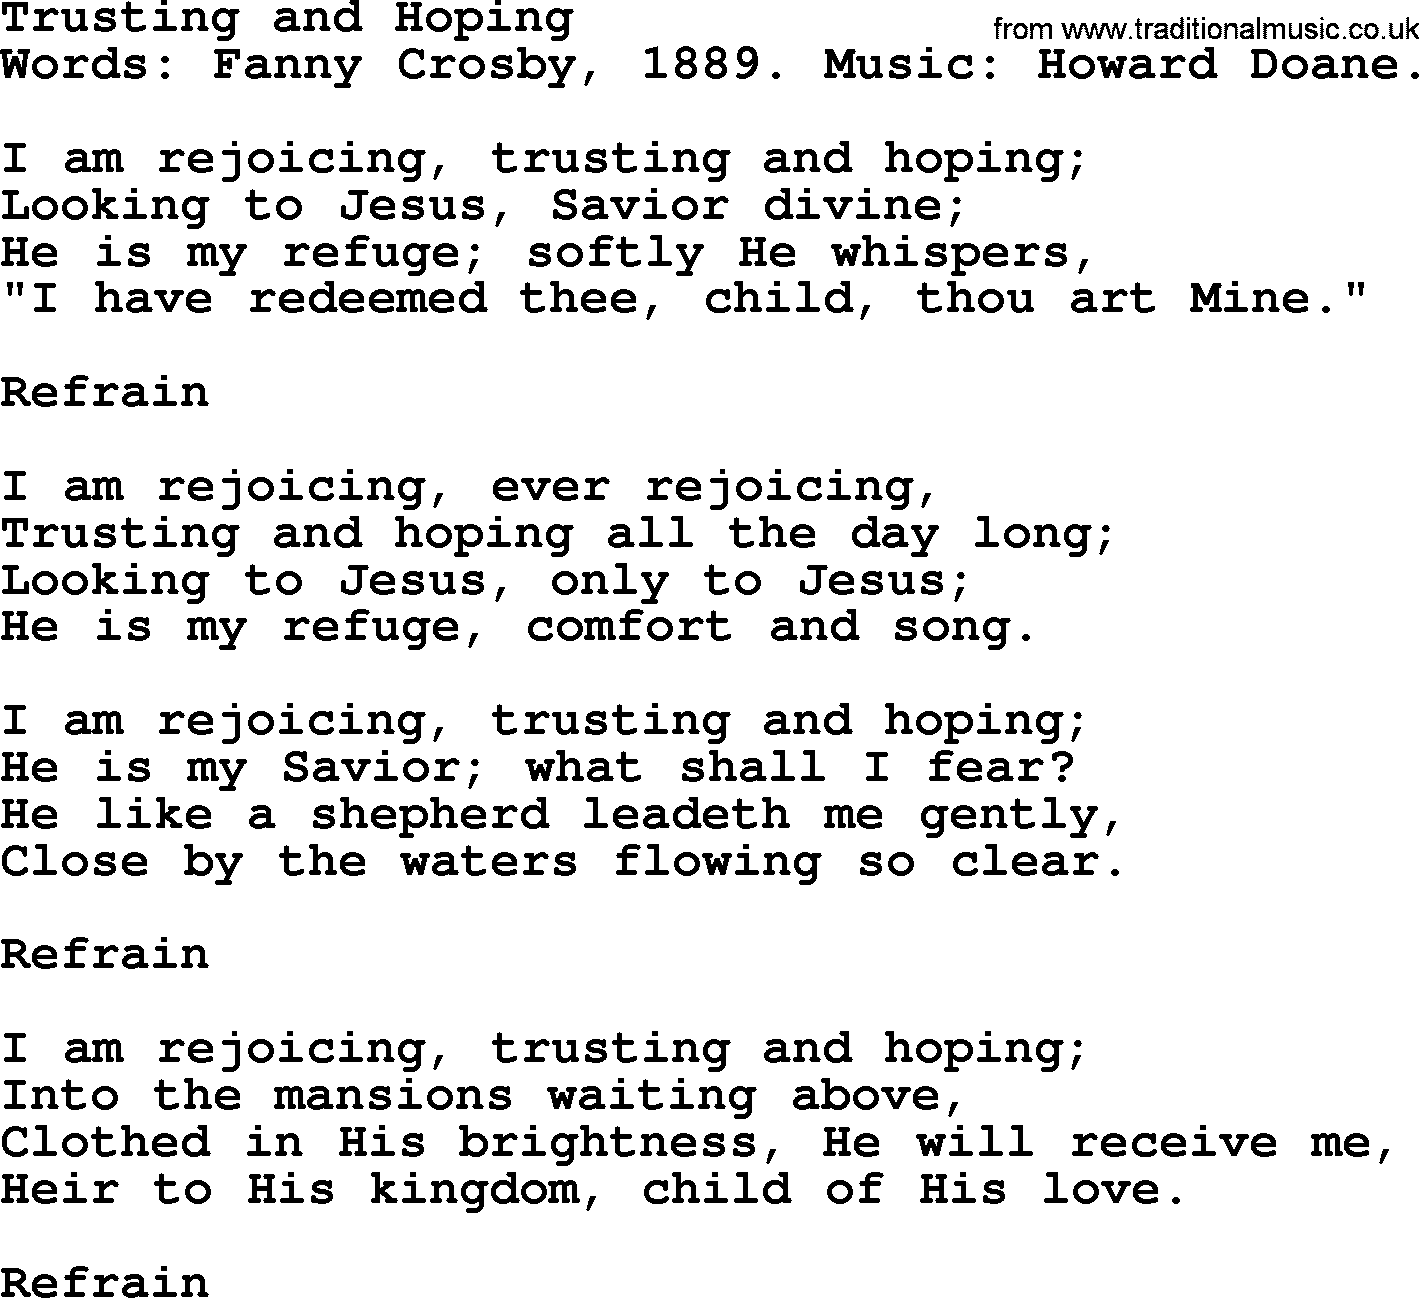 Fanny Crosby song: Trusting And Hoping, lyrics